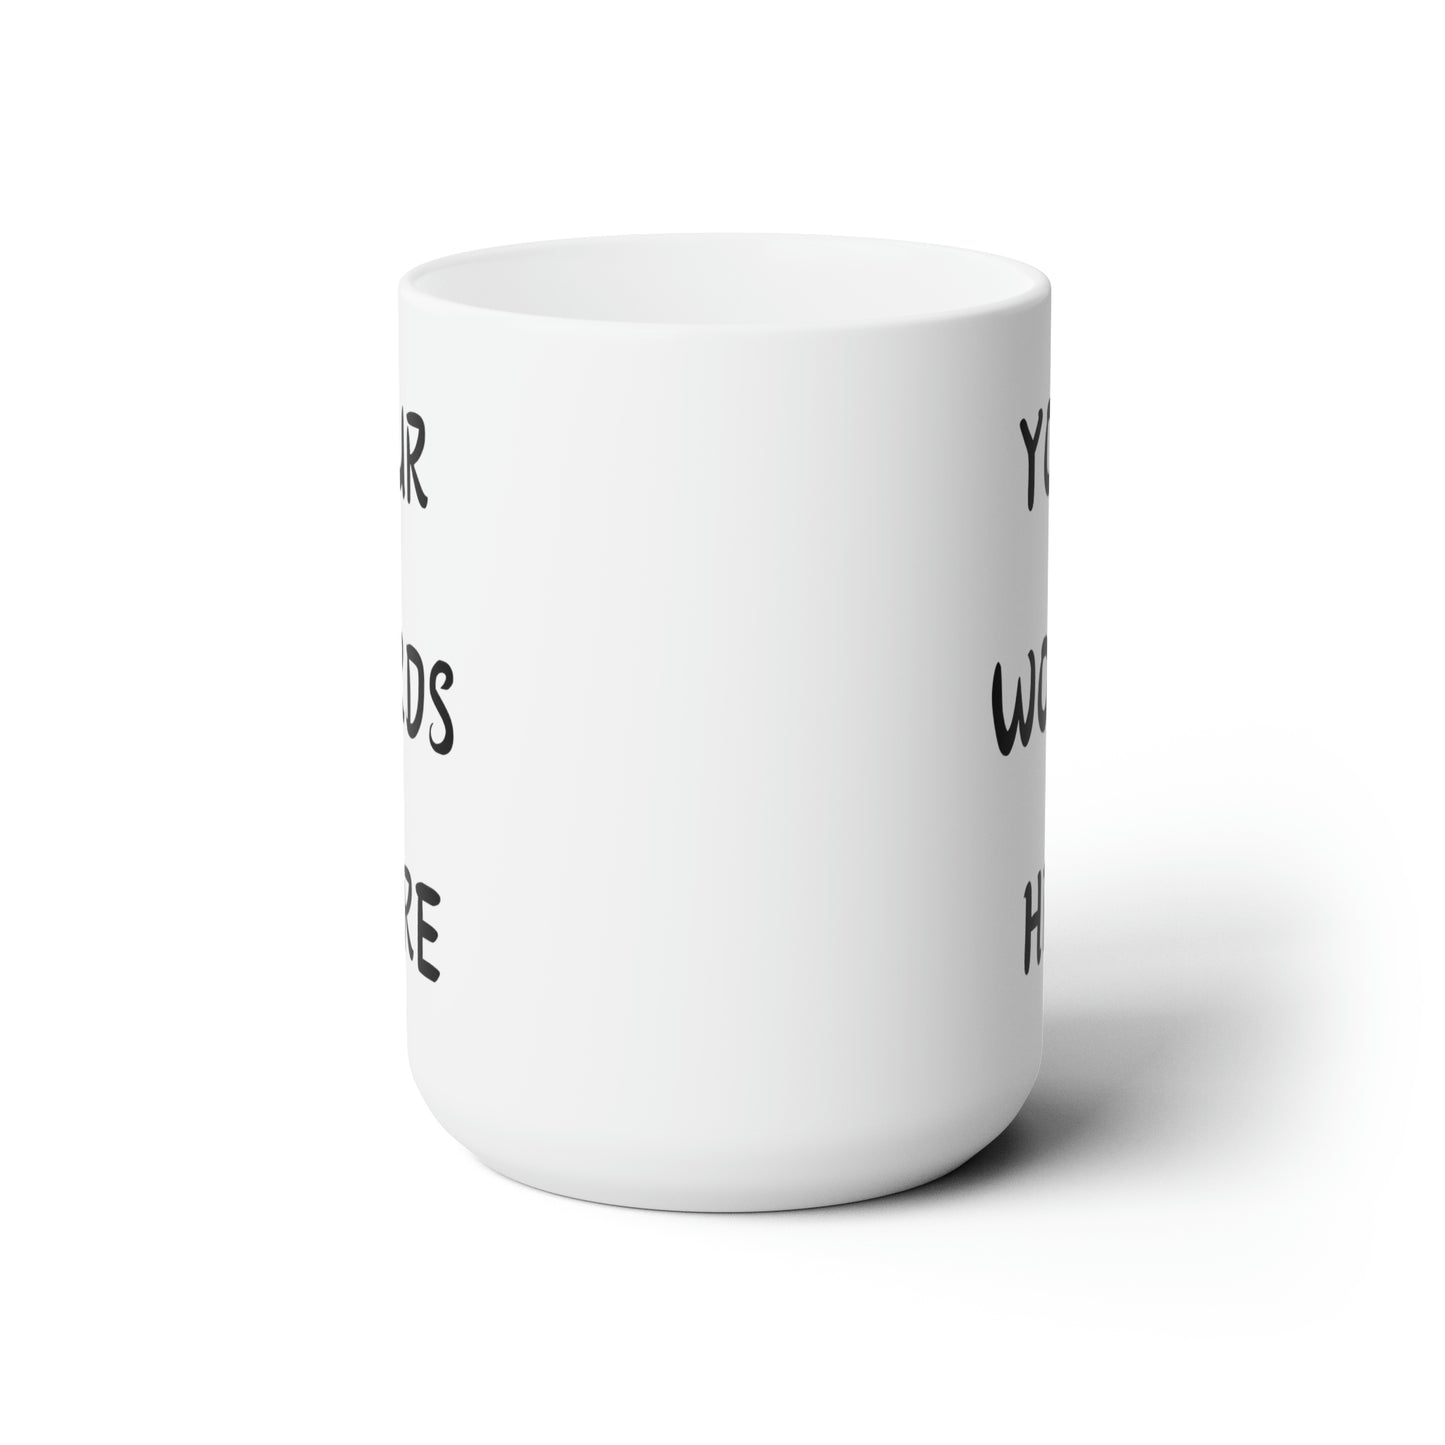 Your Words Here Personalised Ceramic Mug, 15oz